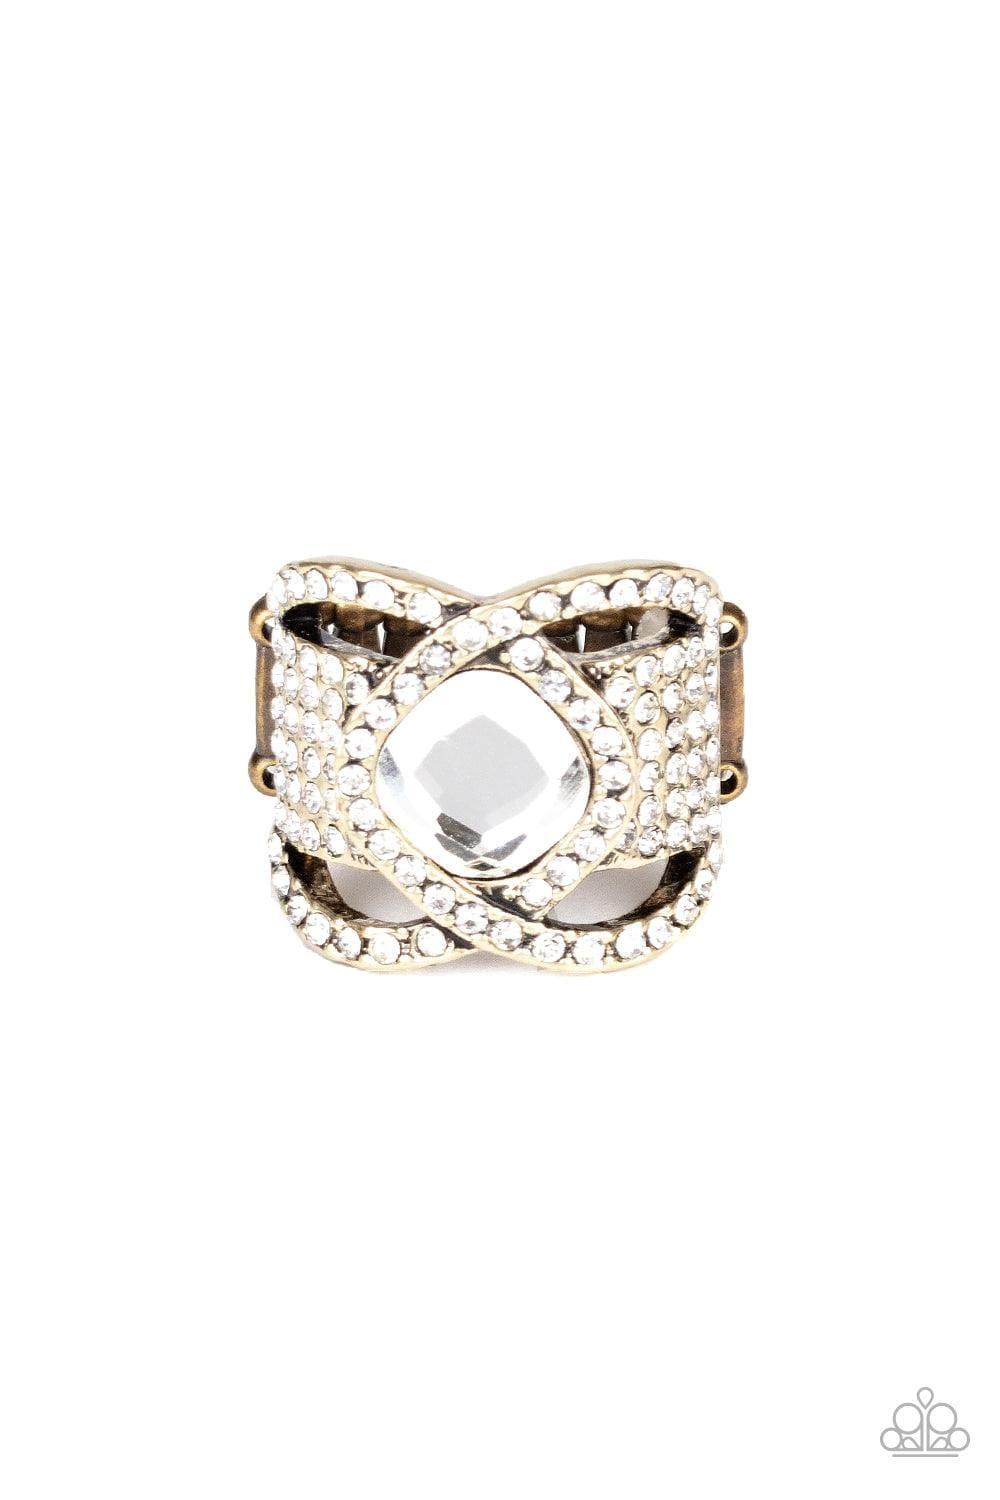 Paparazzi Accessories - Triple Crown Twinkle - Brass Ring - Bling by JessieK